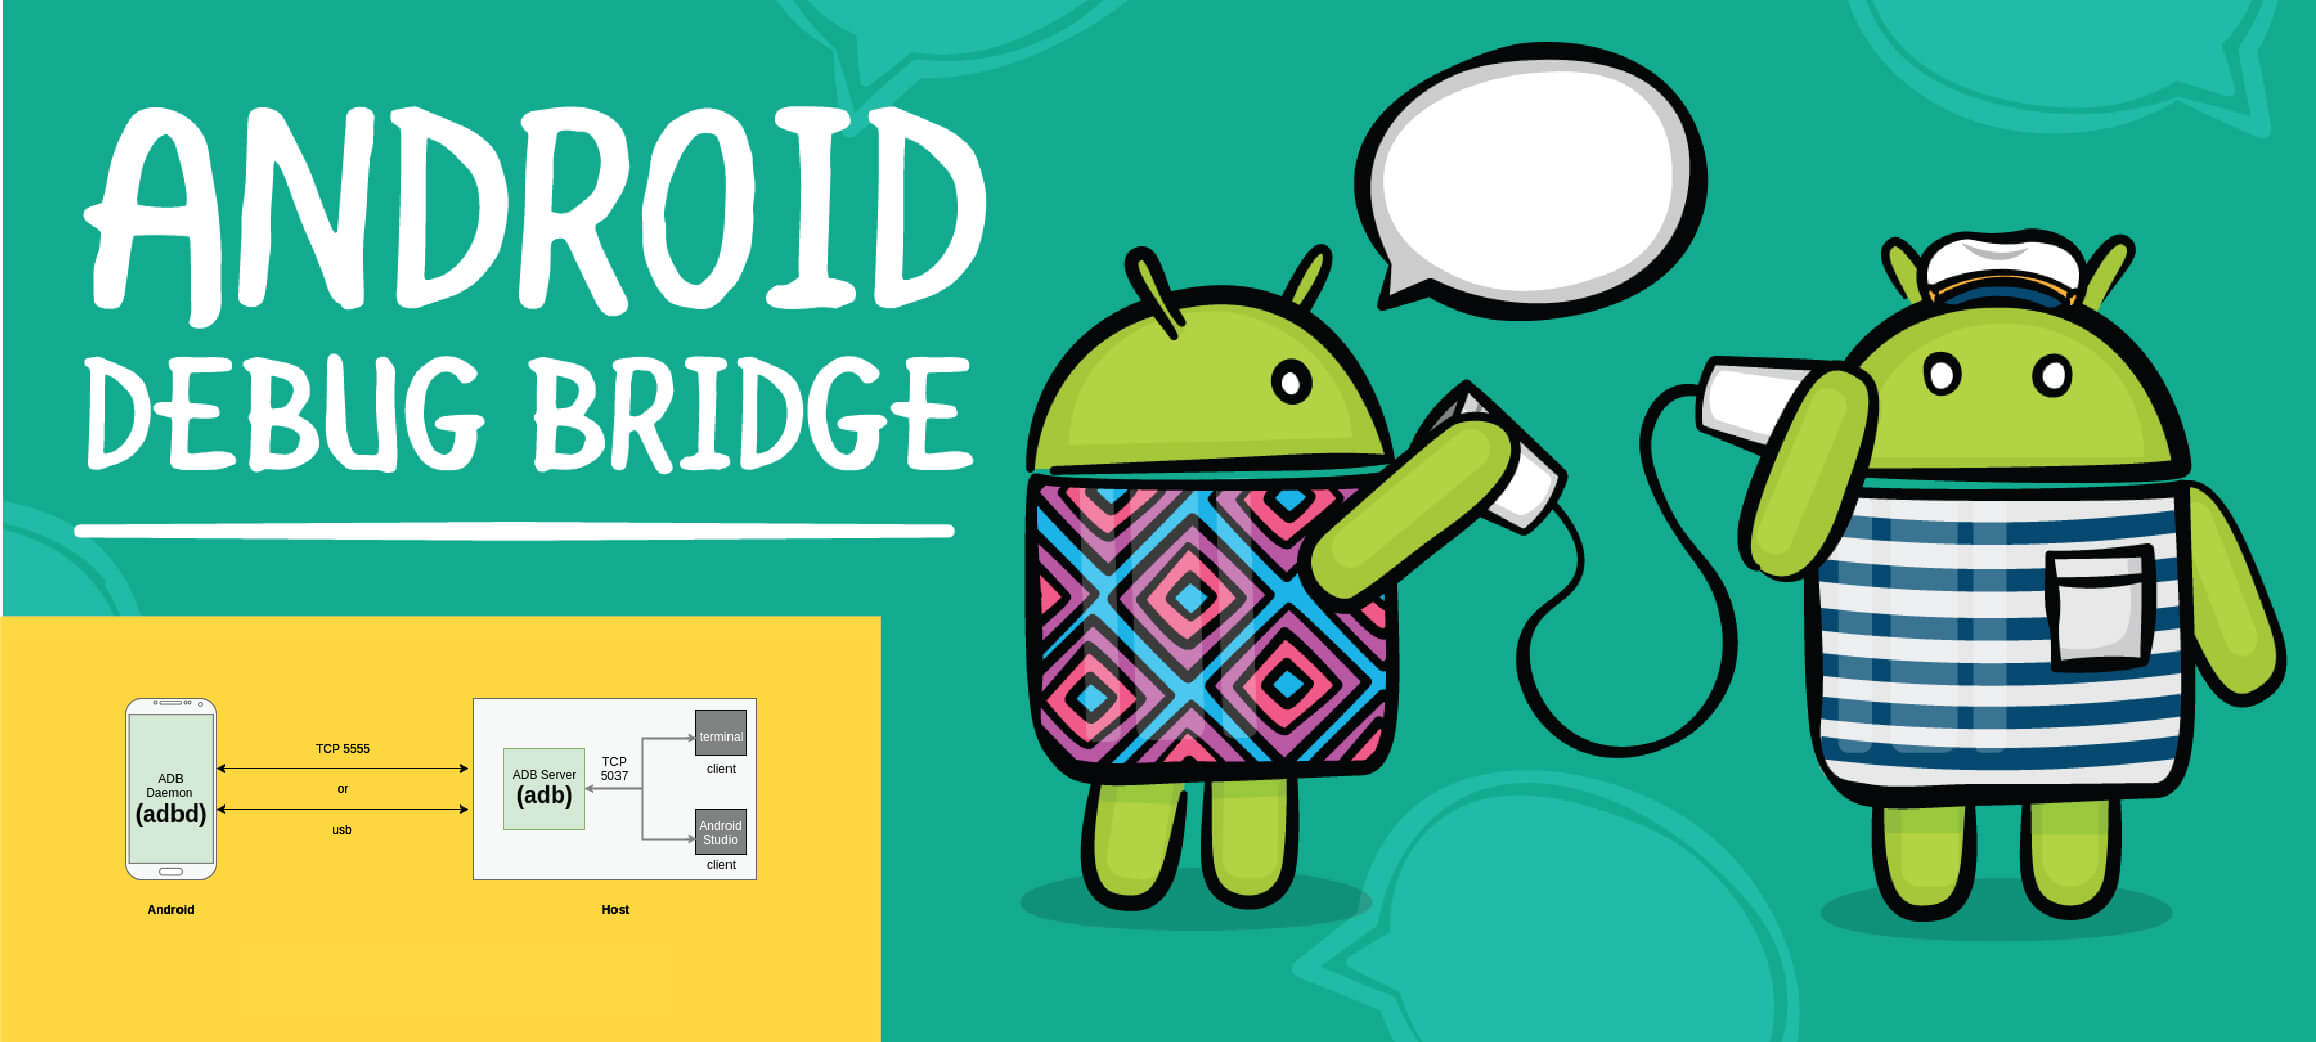 "ADB (Android Debug Bridge) "